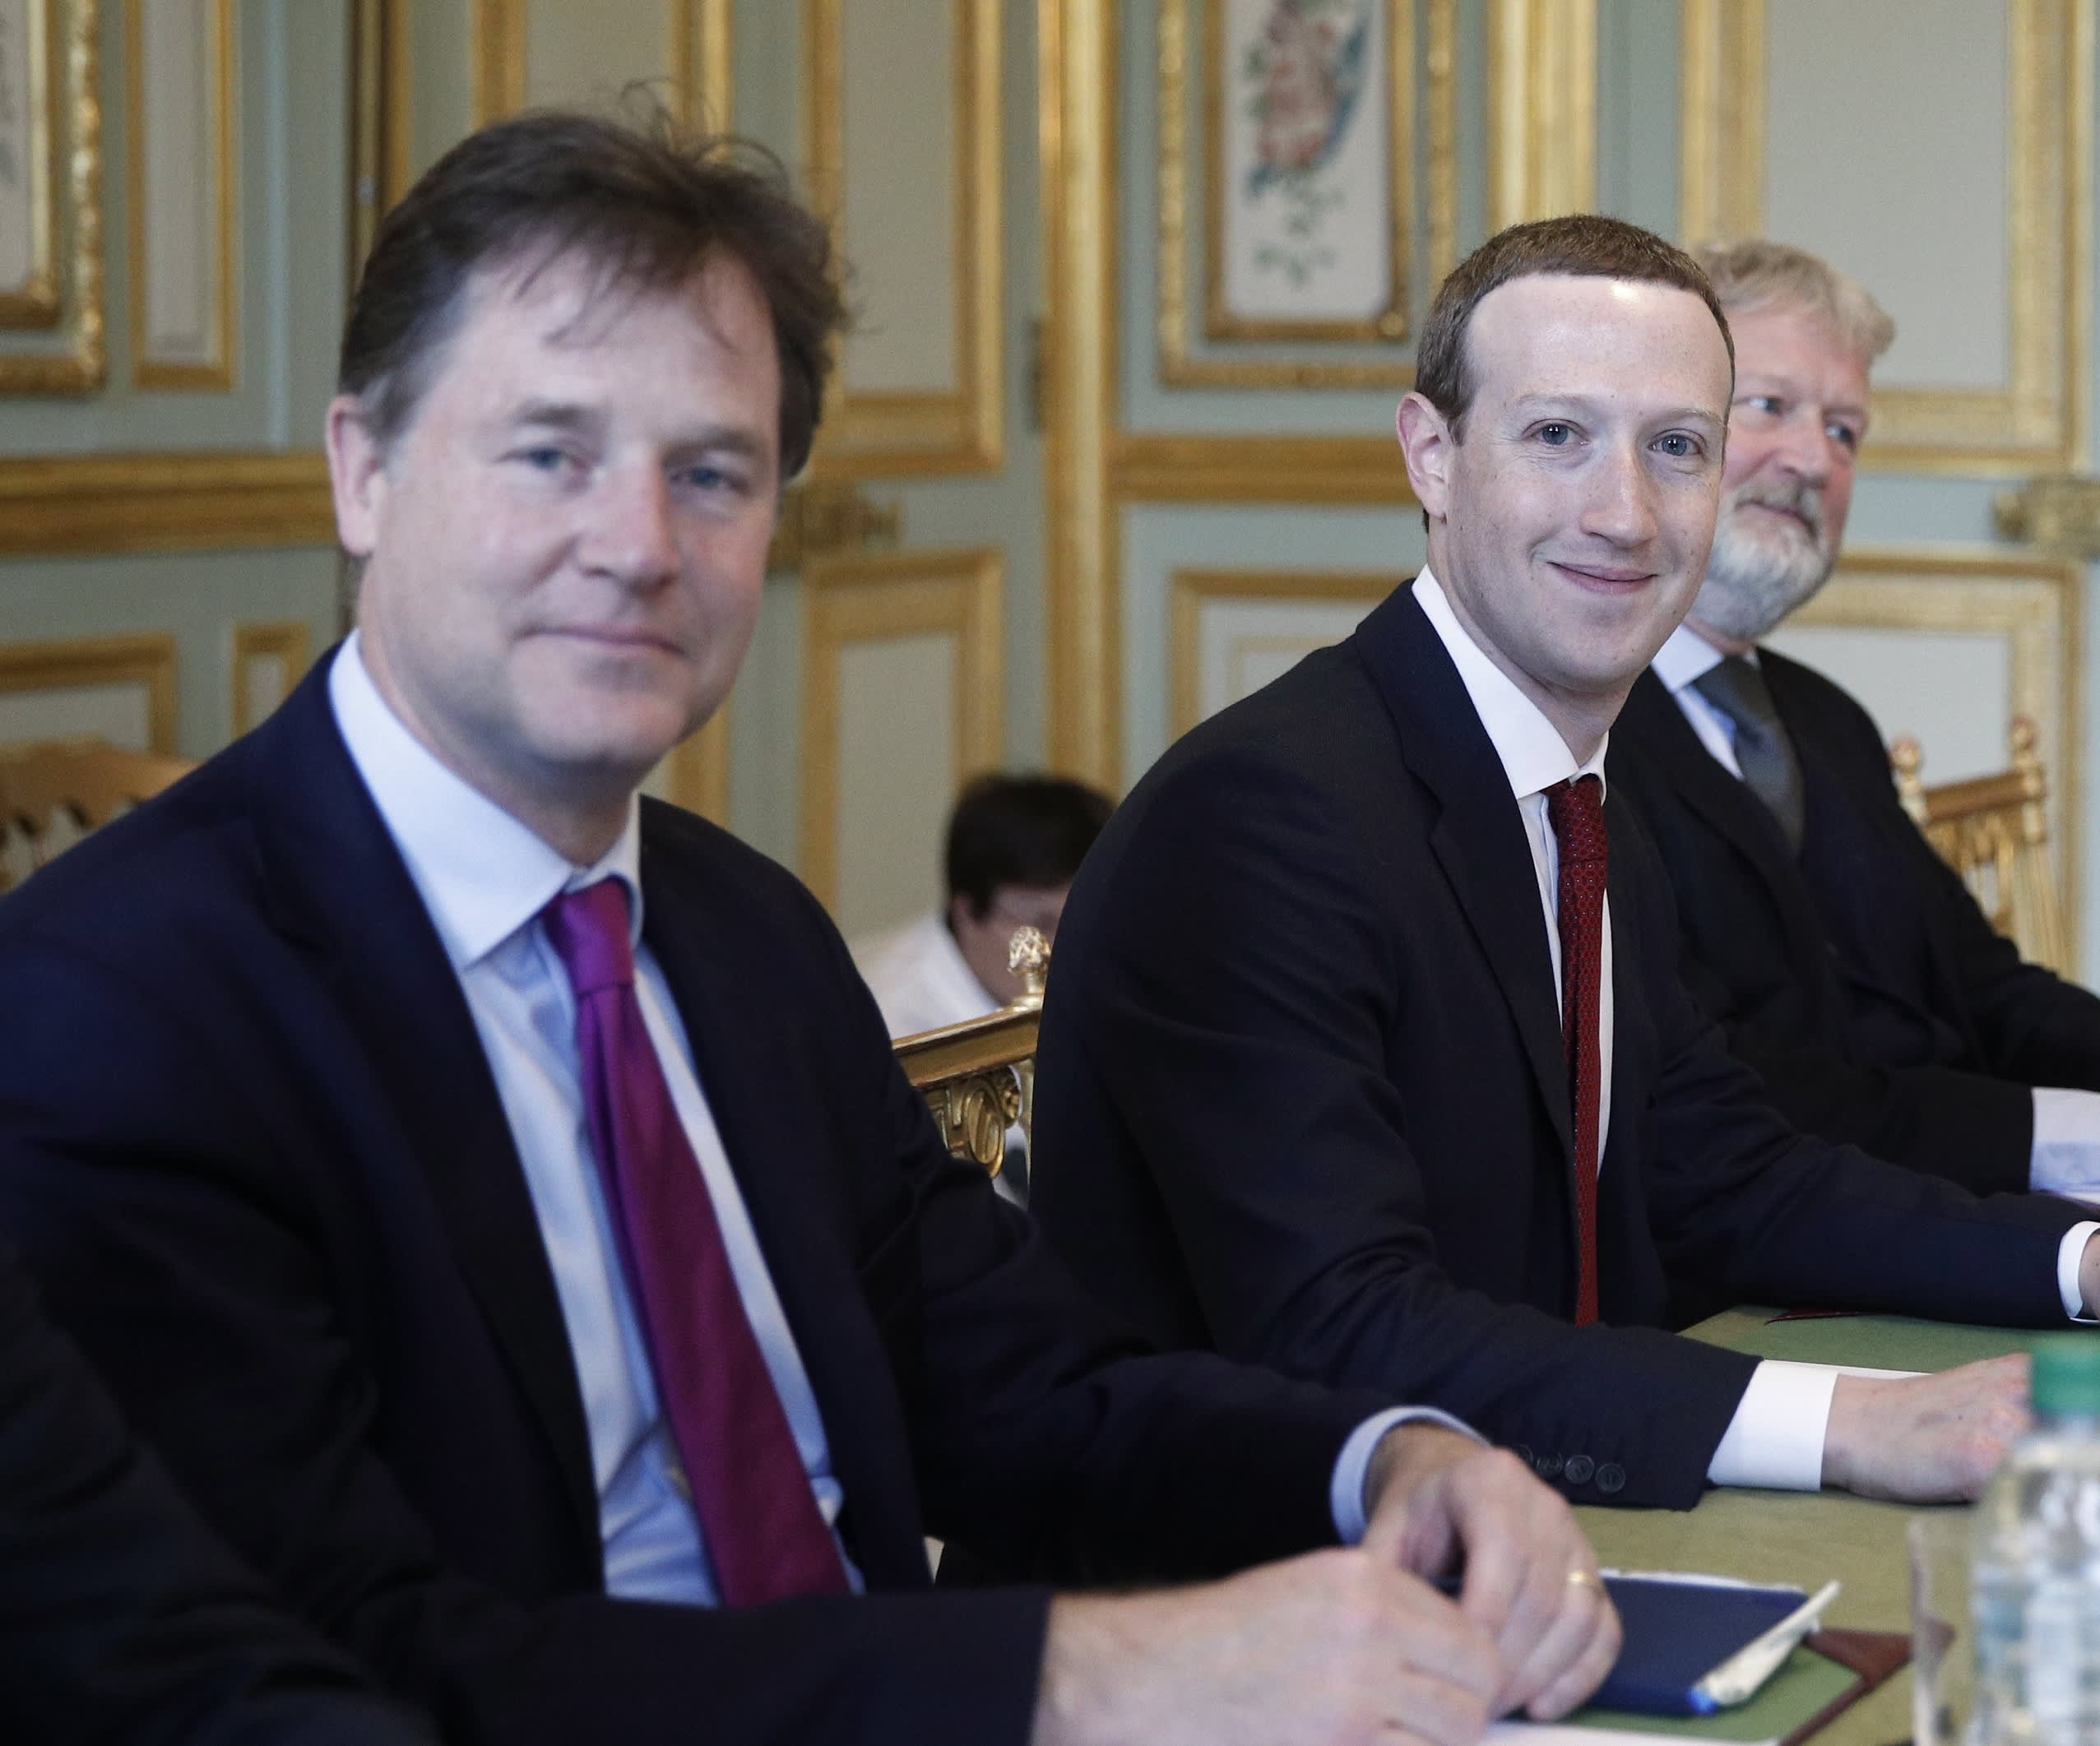 Op-ed: Facebook's Nick Clegg calls for bipartisan approach to break the deadlock on internet regulation